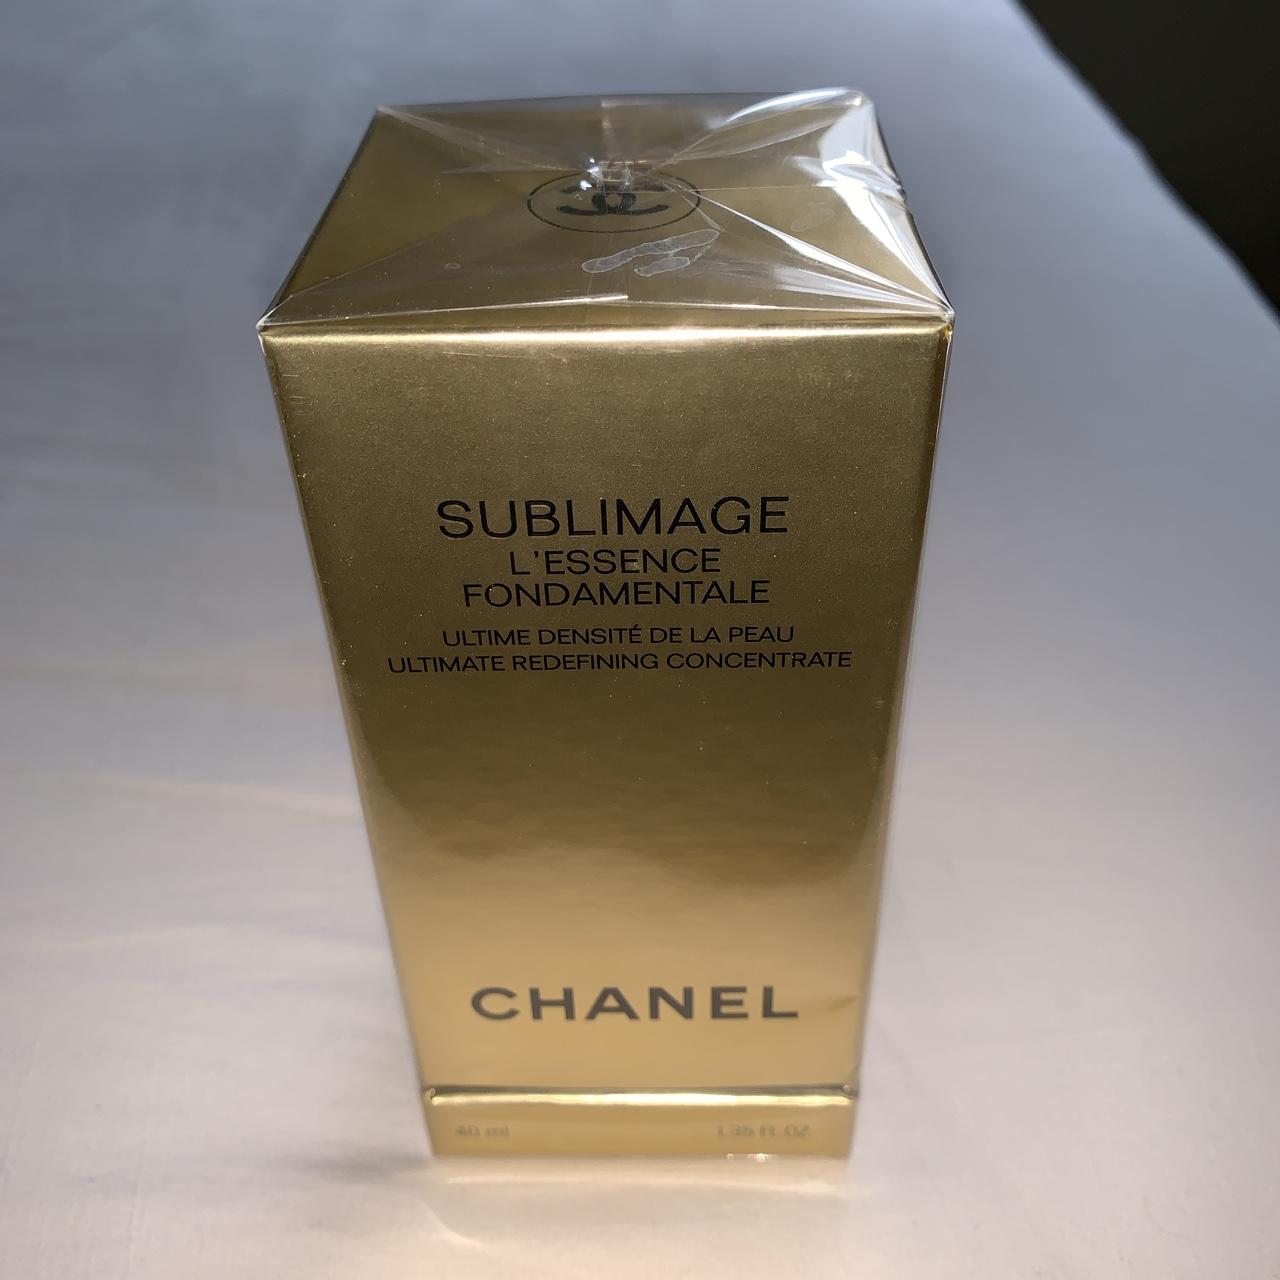 Chanel Sublimage L'Essence Fondamentale Skin care - Depop